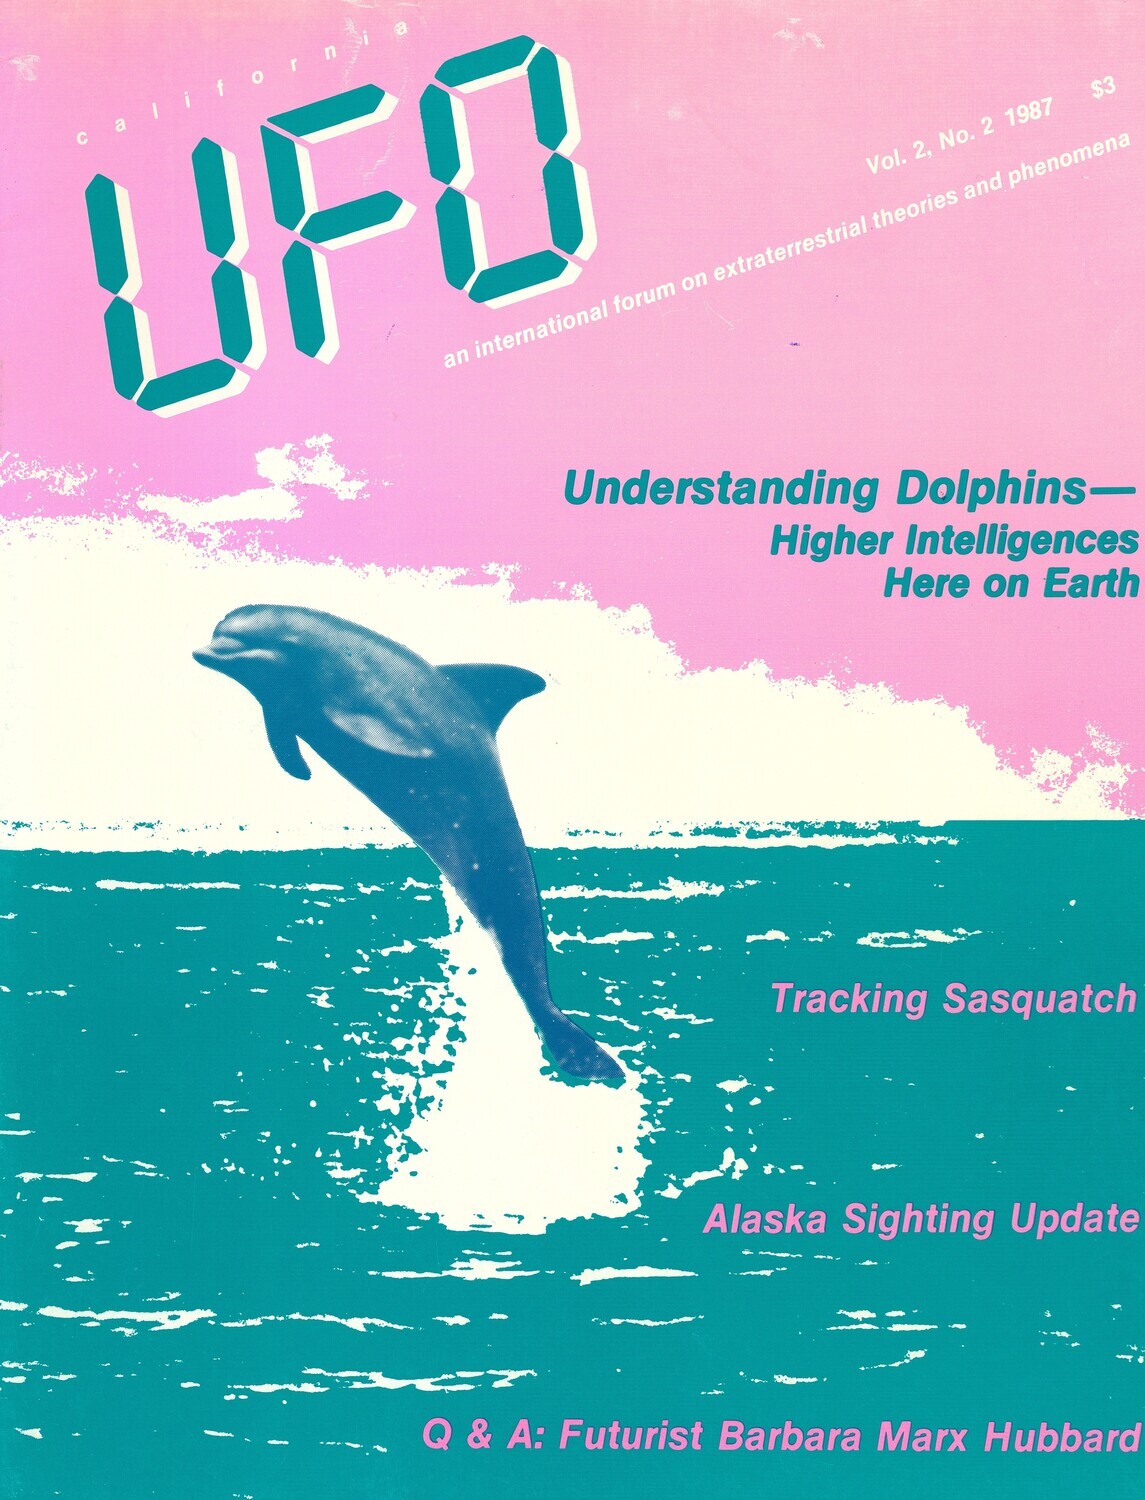 California UFO Magazine Volume 2 Issue 2 1987